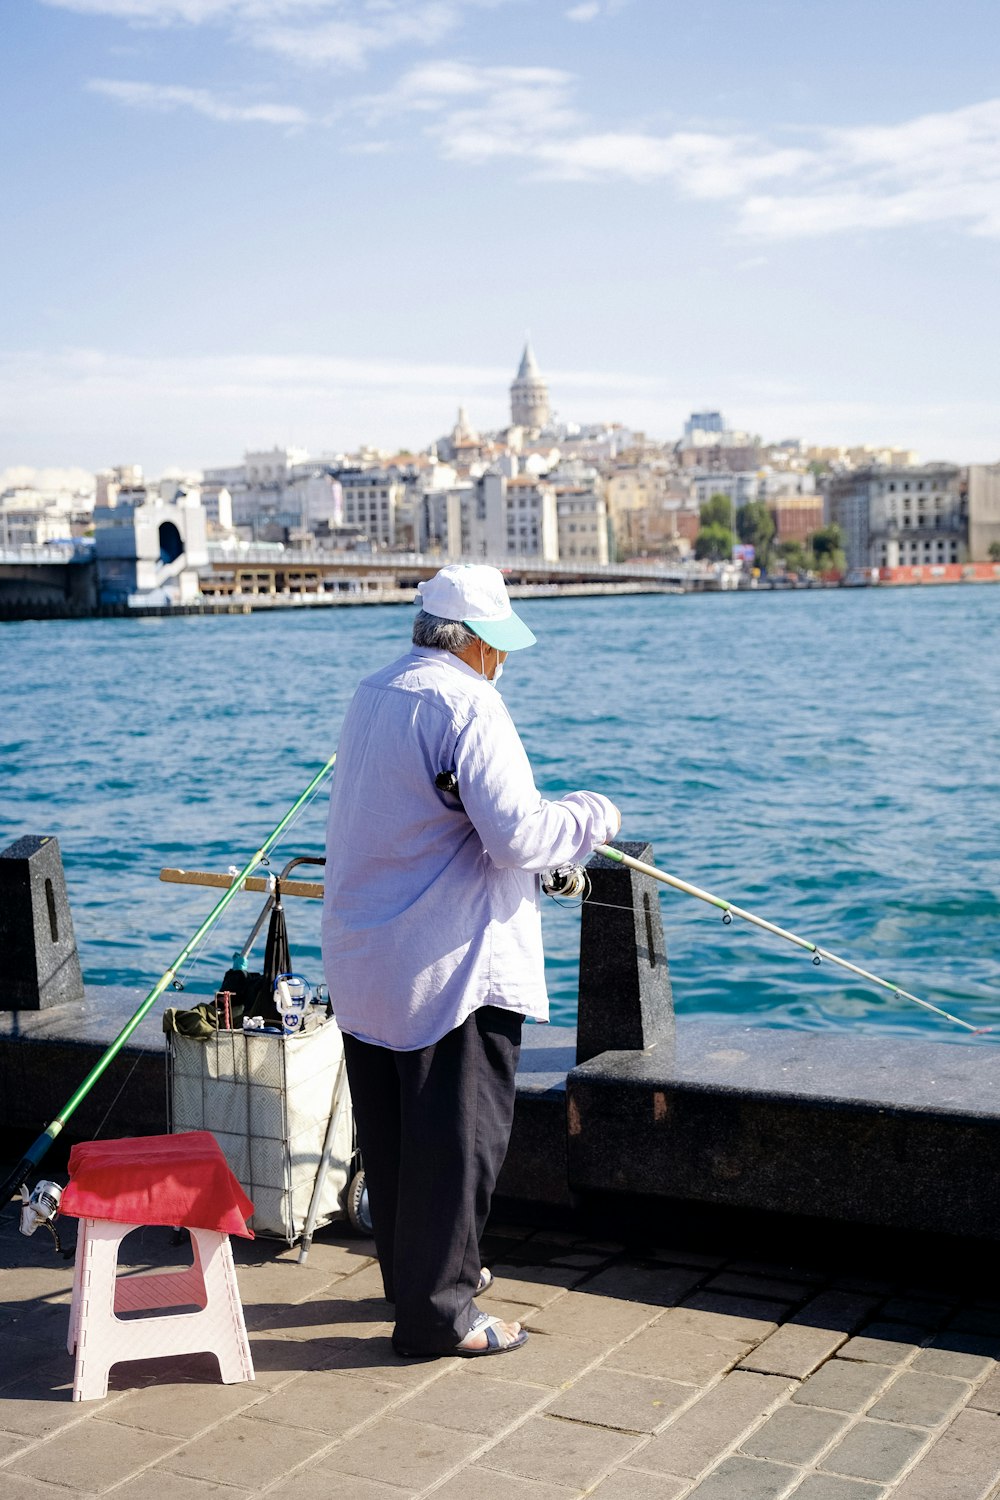 a man fishing on a dock